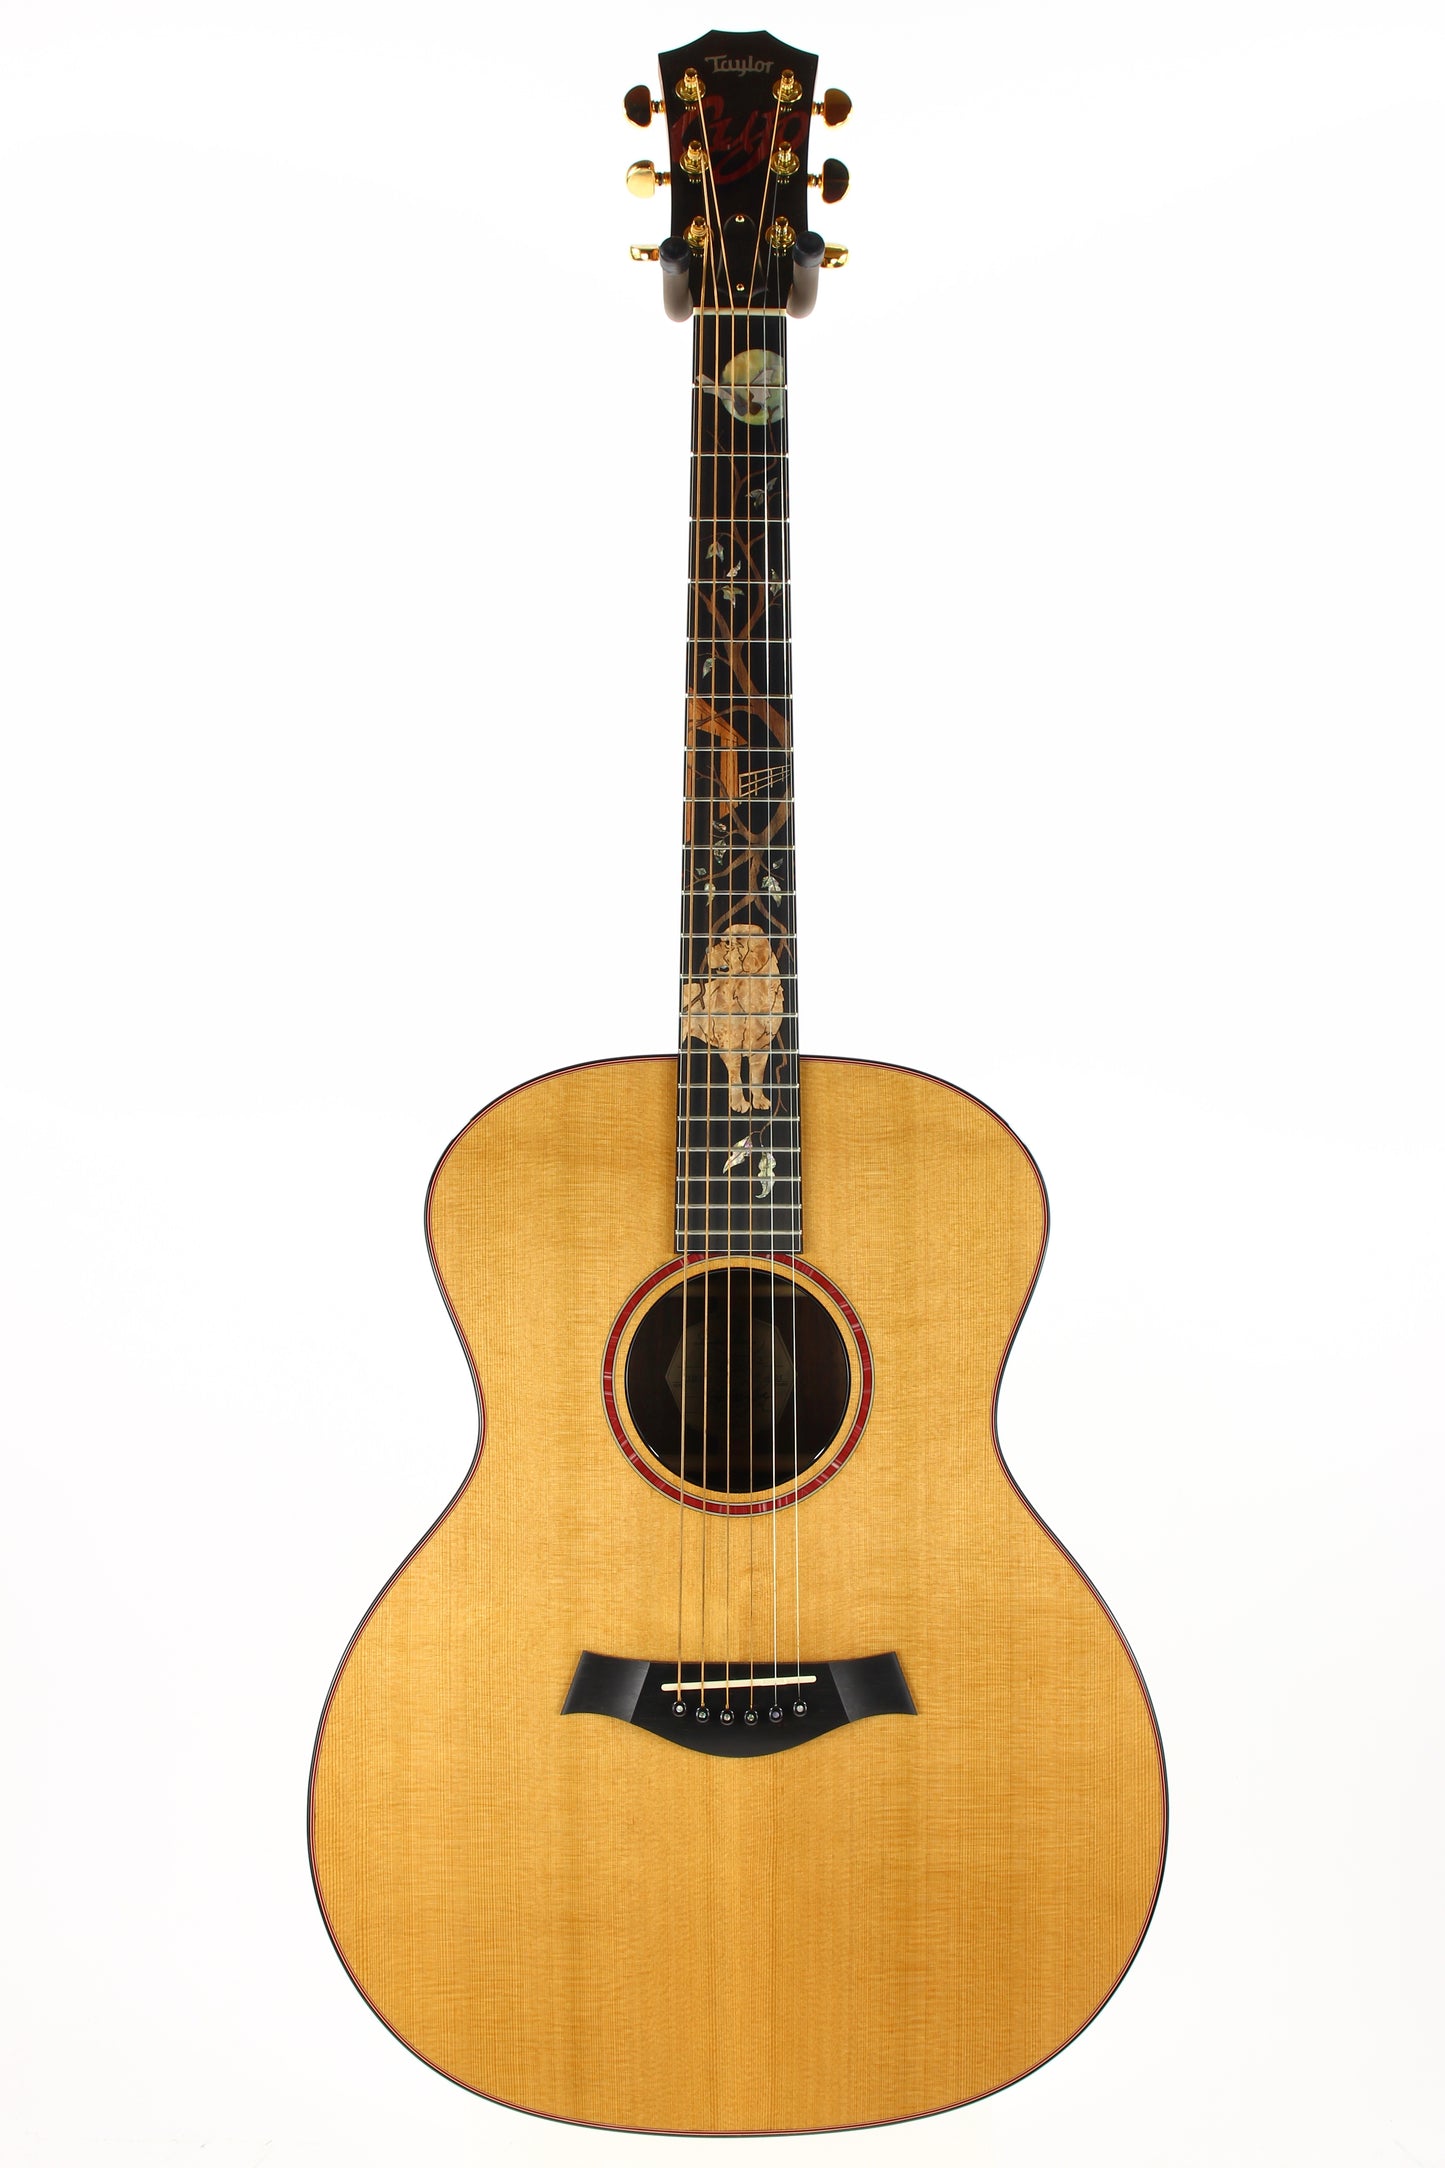 UNPLAYED! 1997 Taylor Cujo-14 Grand Auditorium Stephen King Signed Model Acoustic Guitar - Cedar/Walnut 10